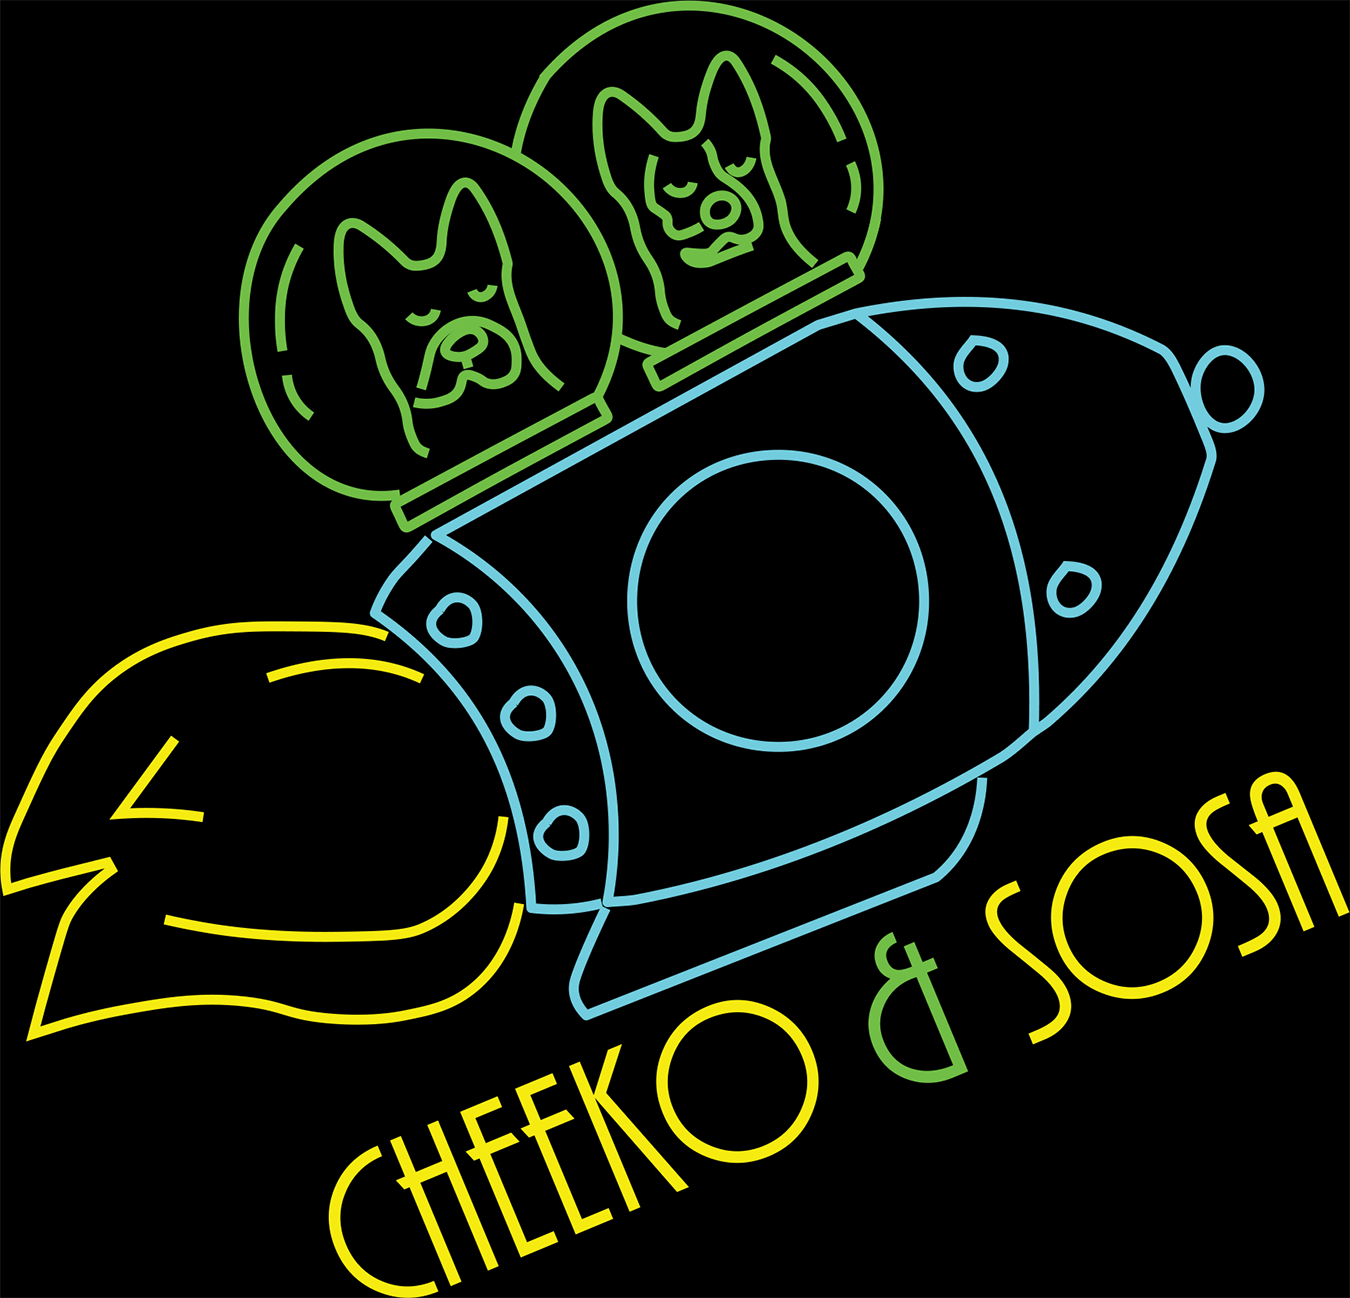 Custom "Cheeko & Sosa" dogs neon sign